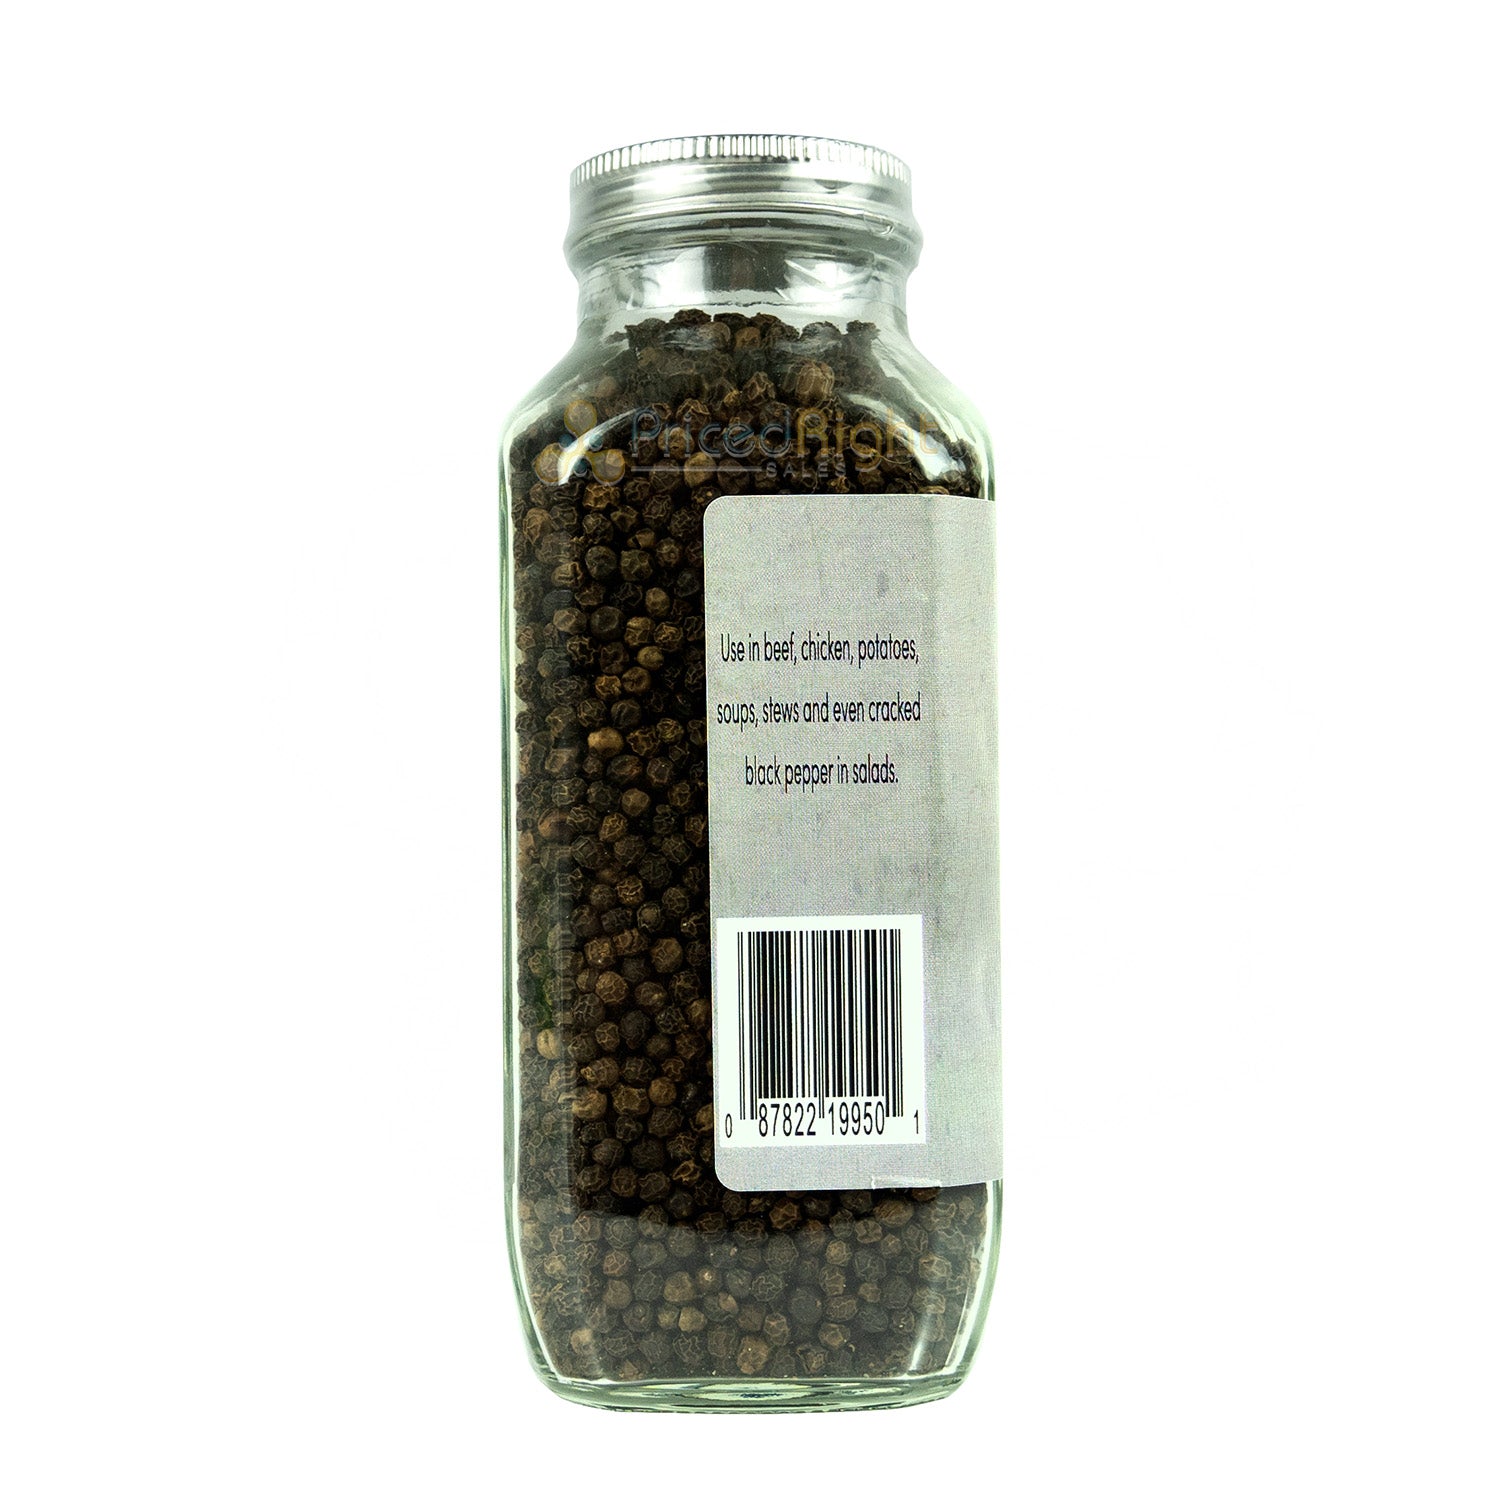 Pepper Creek Farms Black Peppercorns Stout For A Fresh Pepper Flavor 8 oz Jar